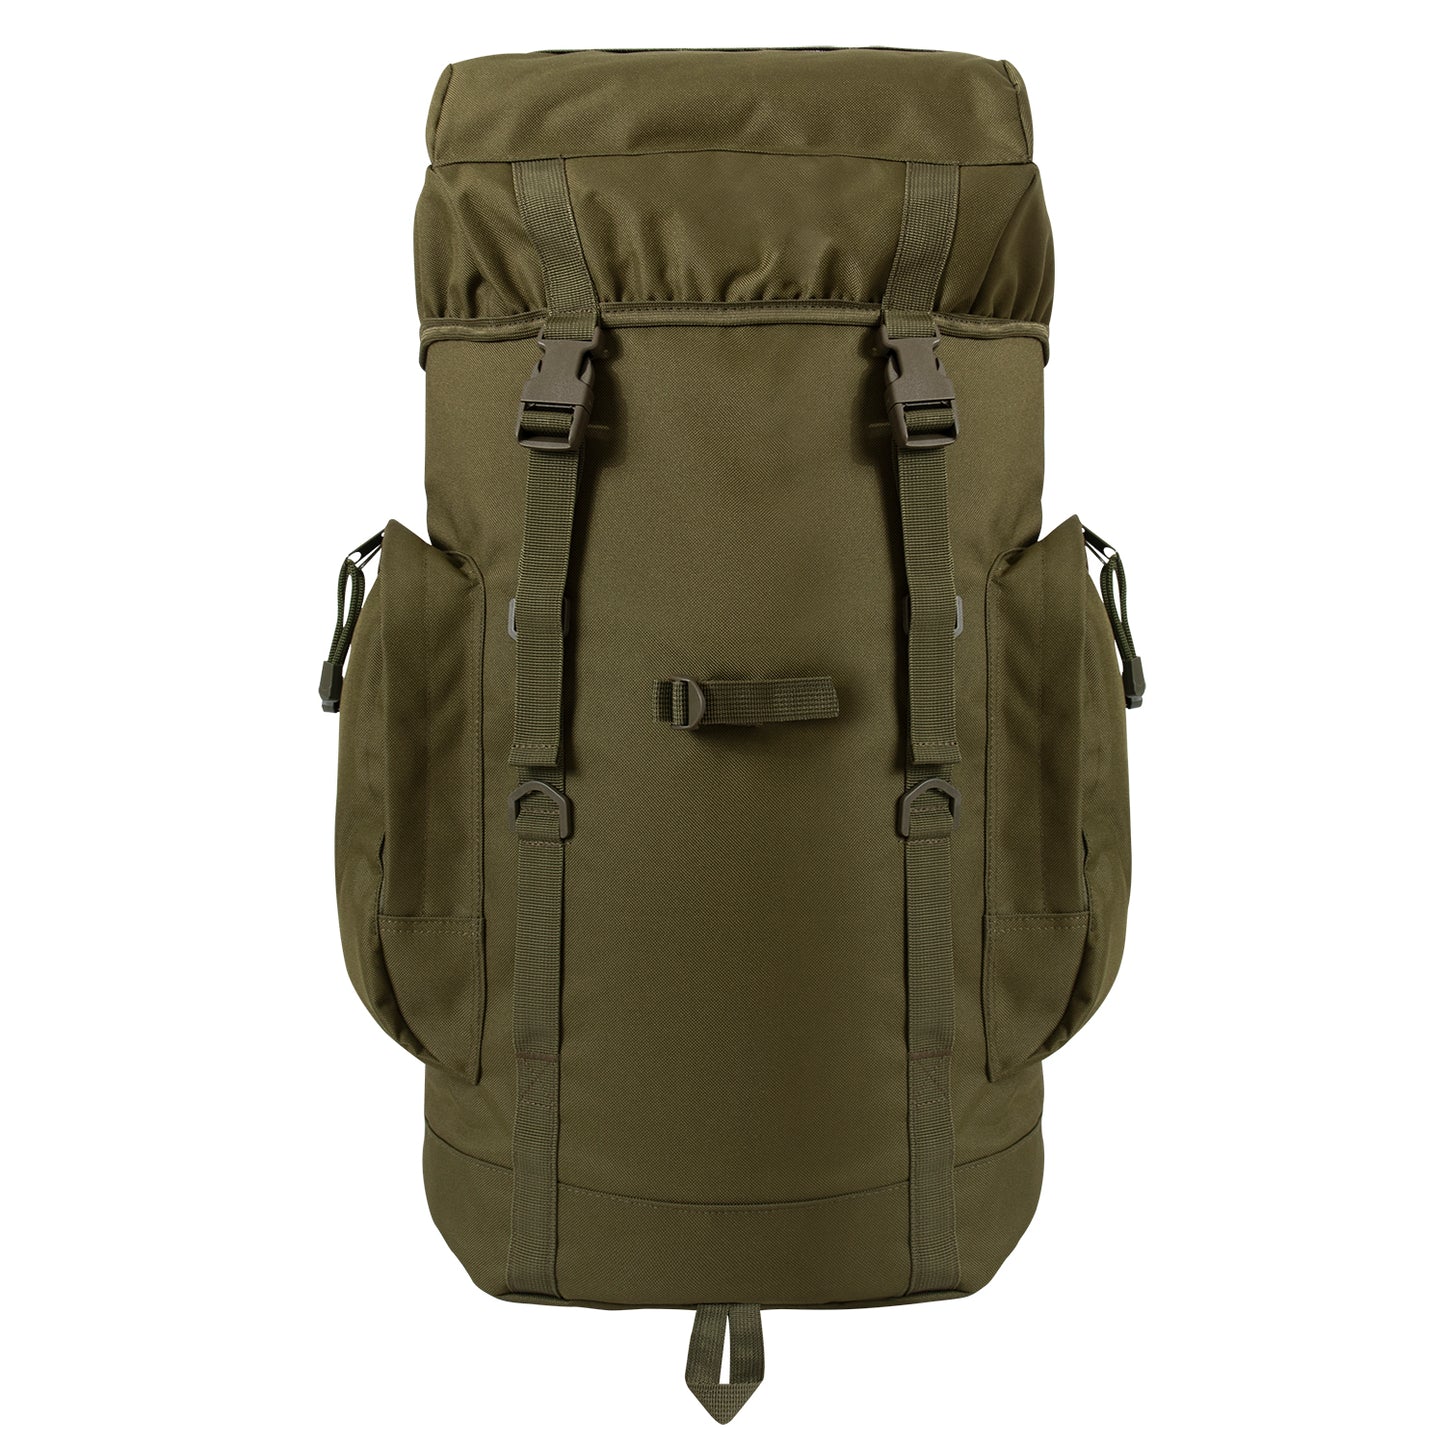 Milspec 45L Tactical Backpack Tactical Packs MilTac Tactical Military Outdoor Gear Australia